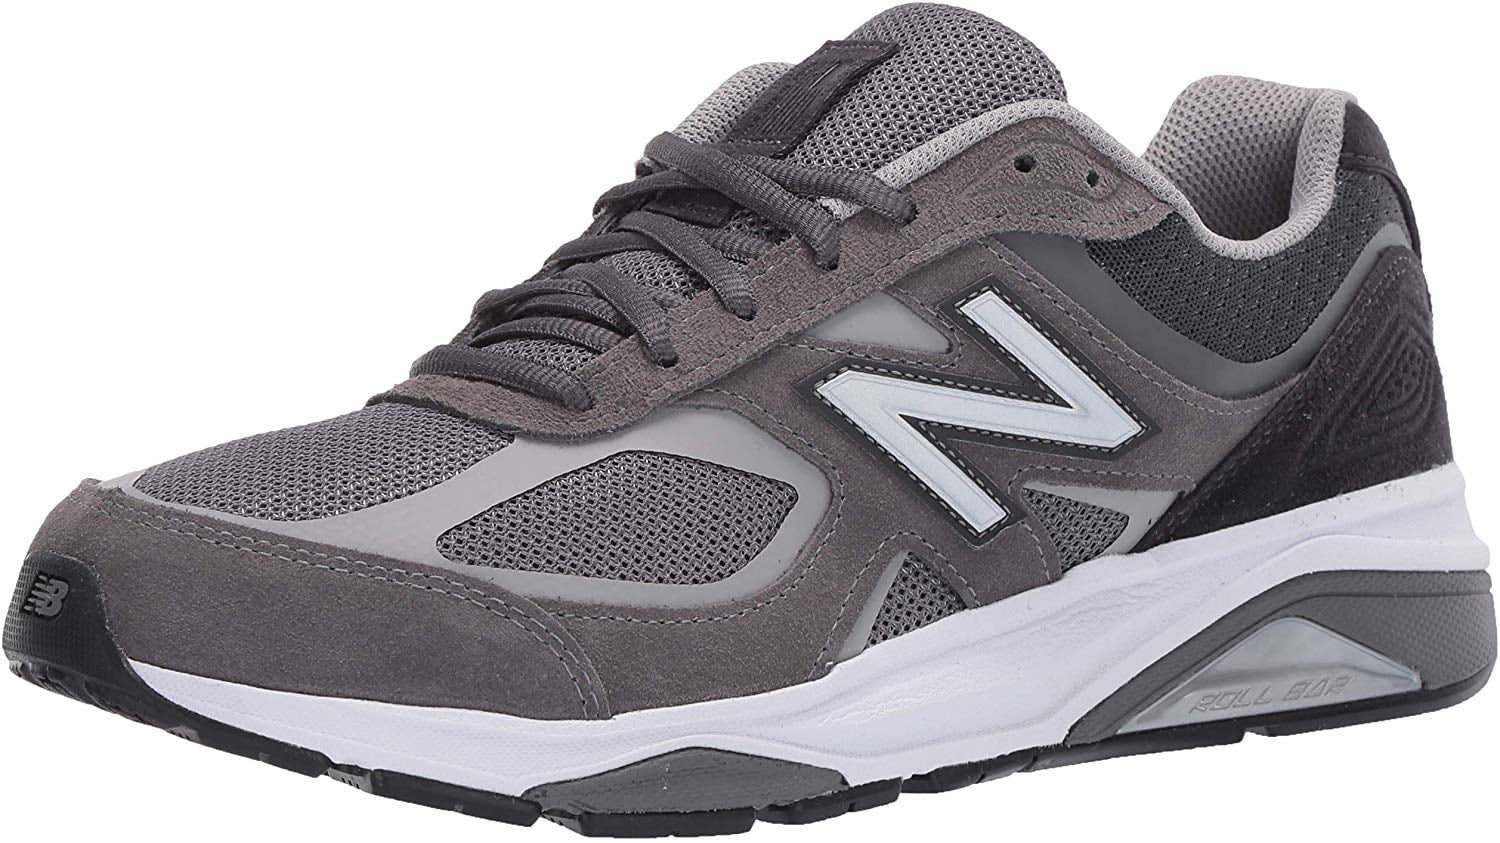 New Balance Men's 1540v3 Running Shoe, Grey/Black, 16 4E US | Walmart Canada